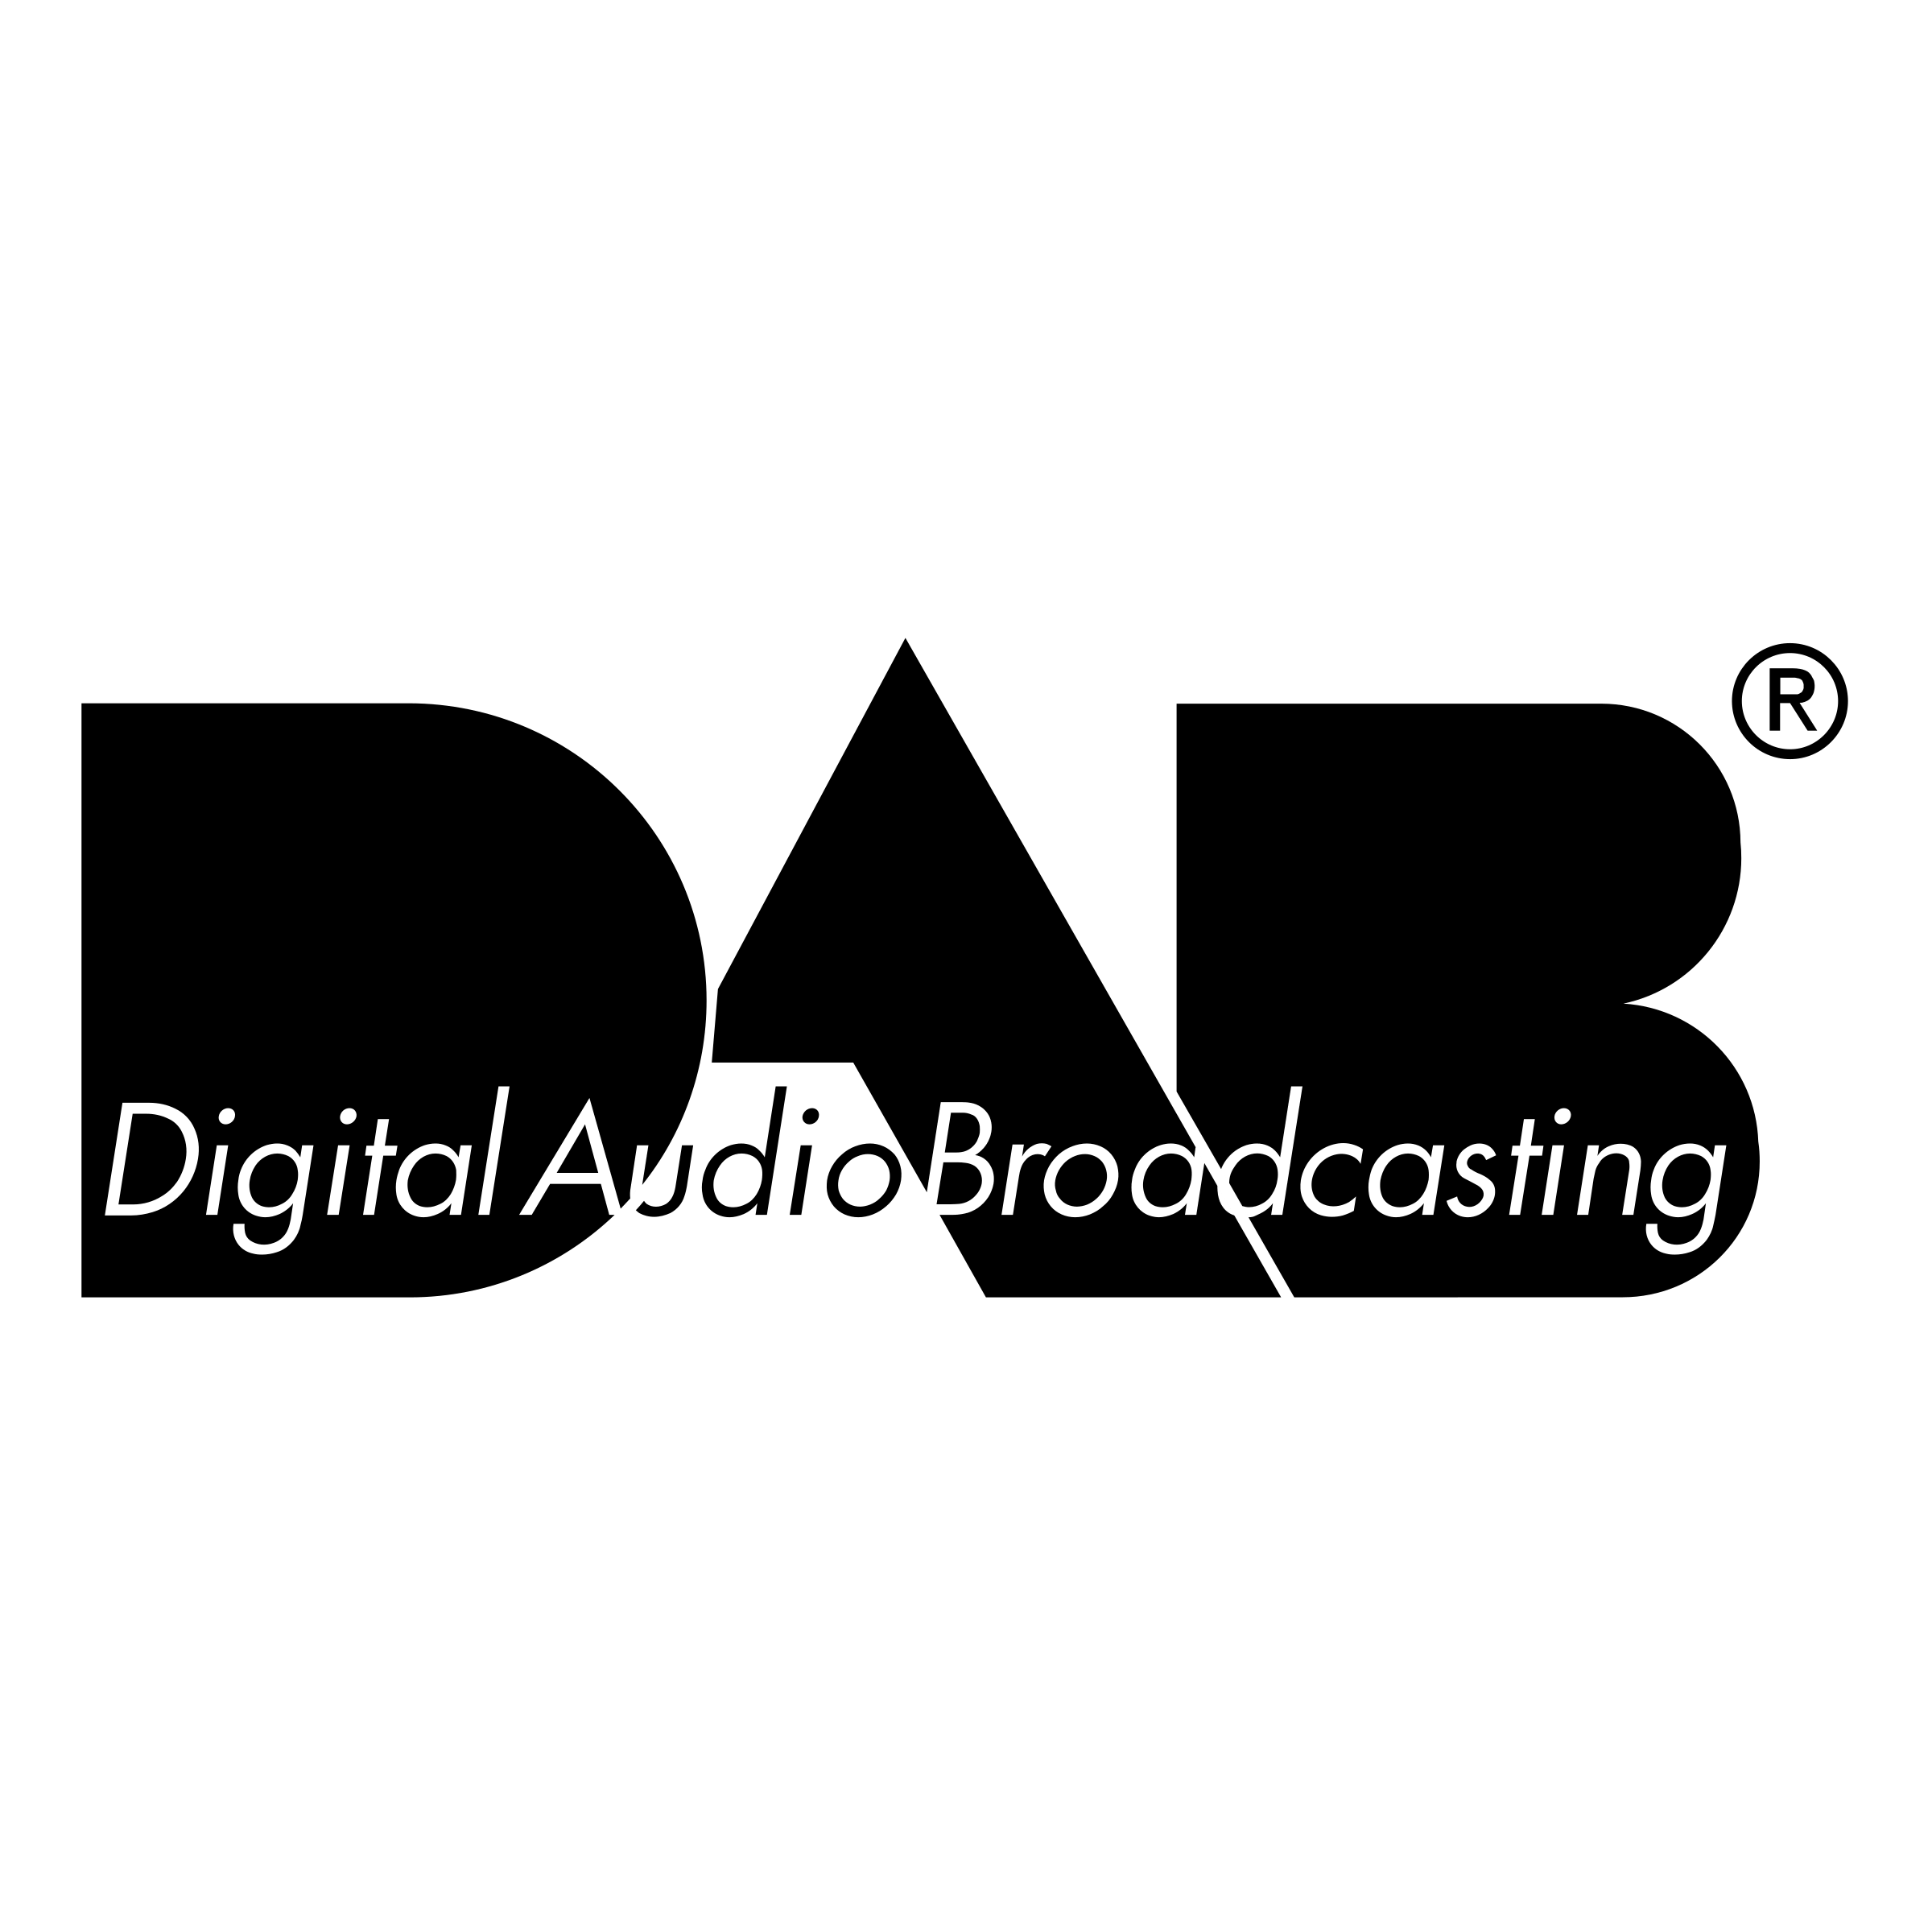 DAB Logo - DAB Logo PNG Transparent & SVG Vector - Freebie Supply